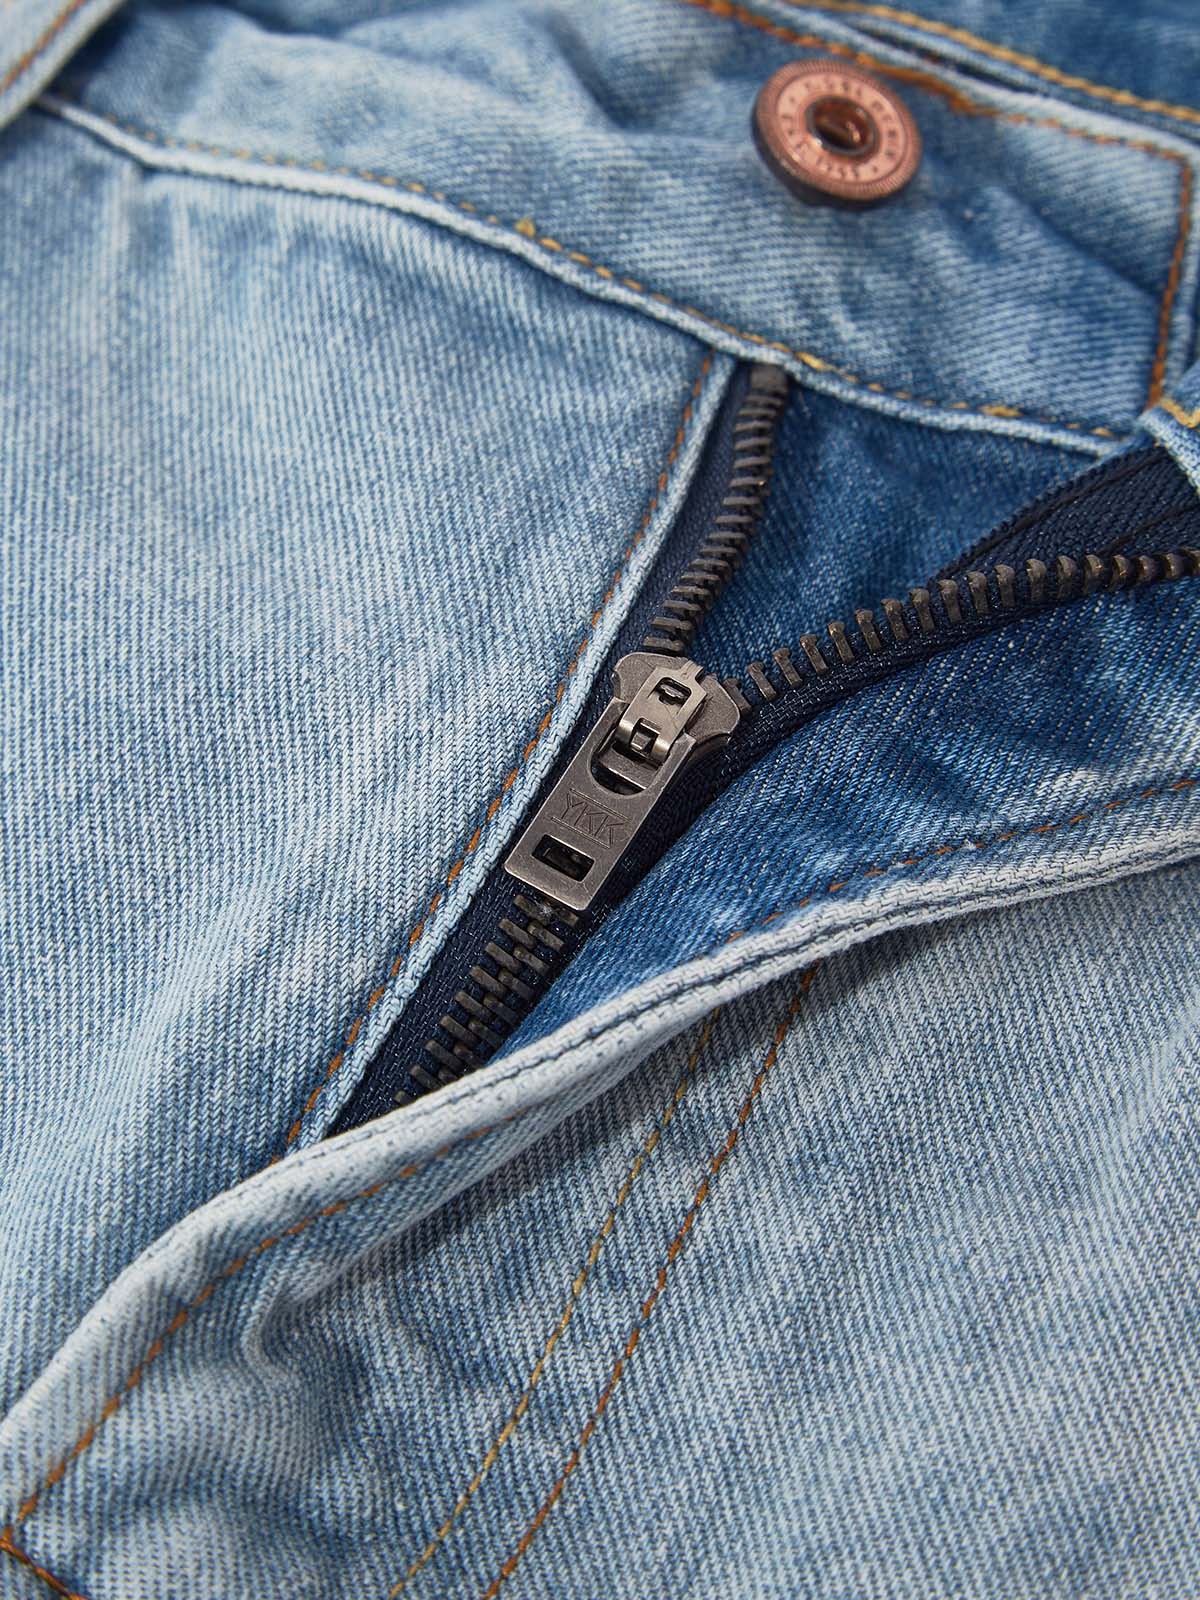 OBSTACLES &amp; DANGERS© Zerrissene Jeans mit Buntglas-Print